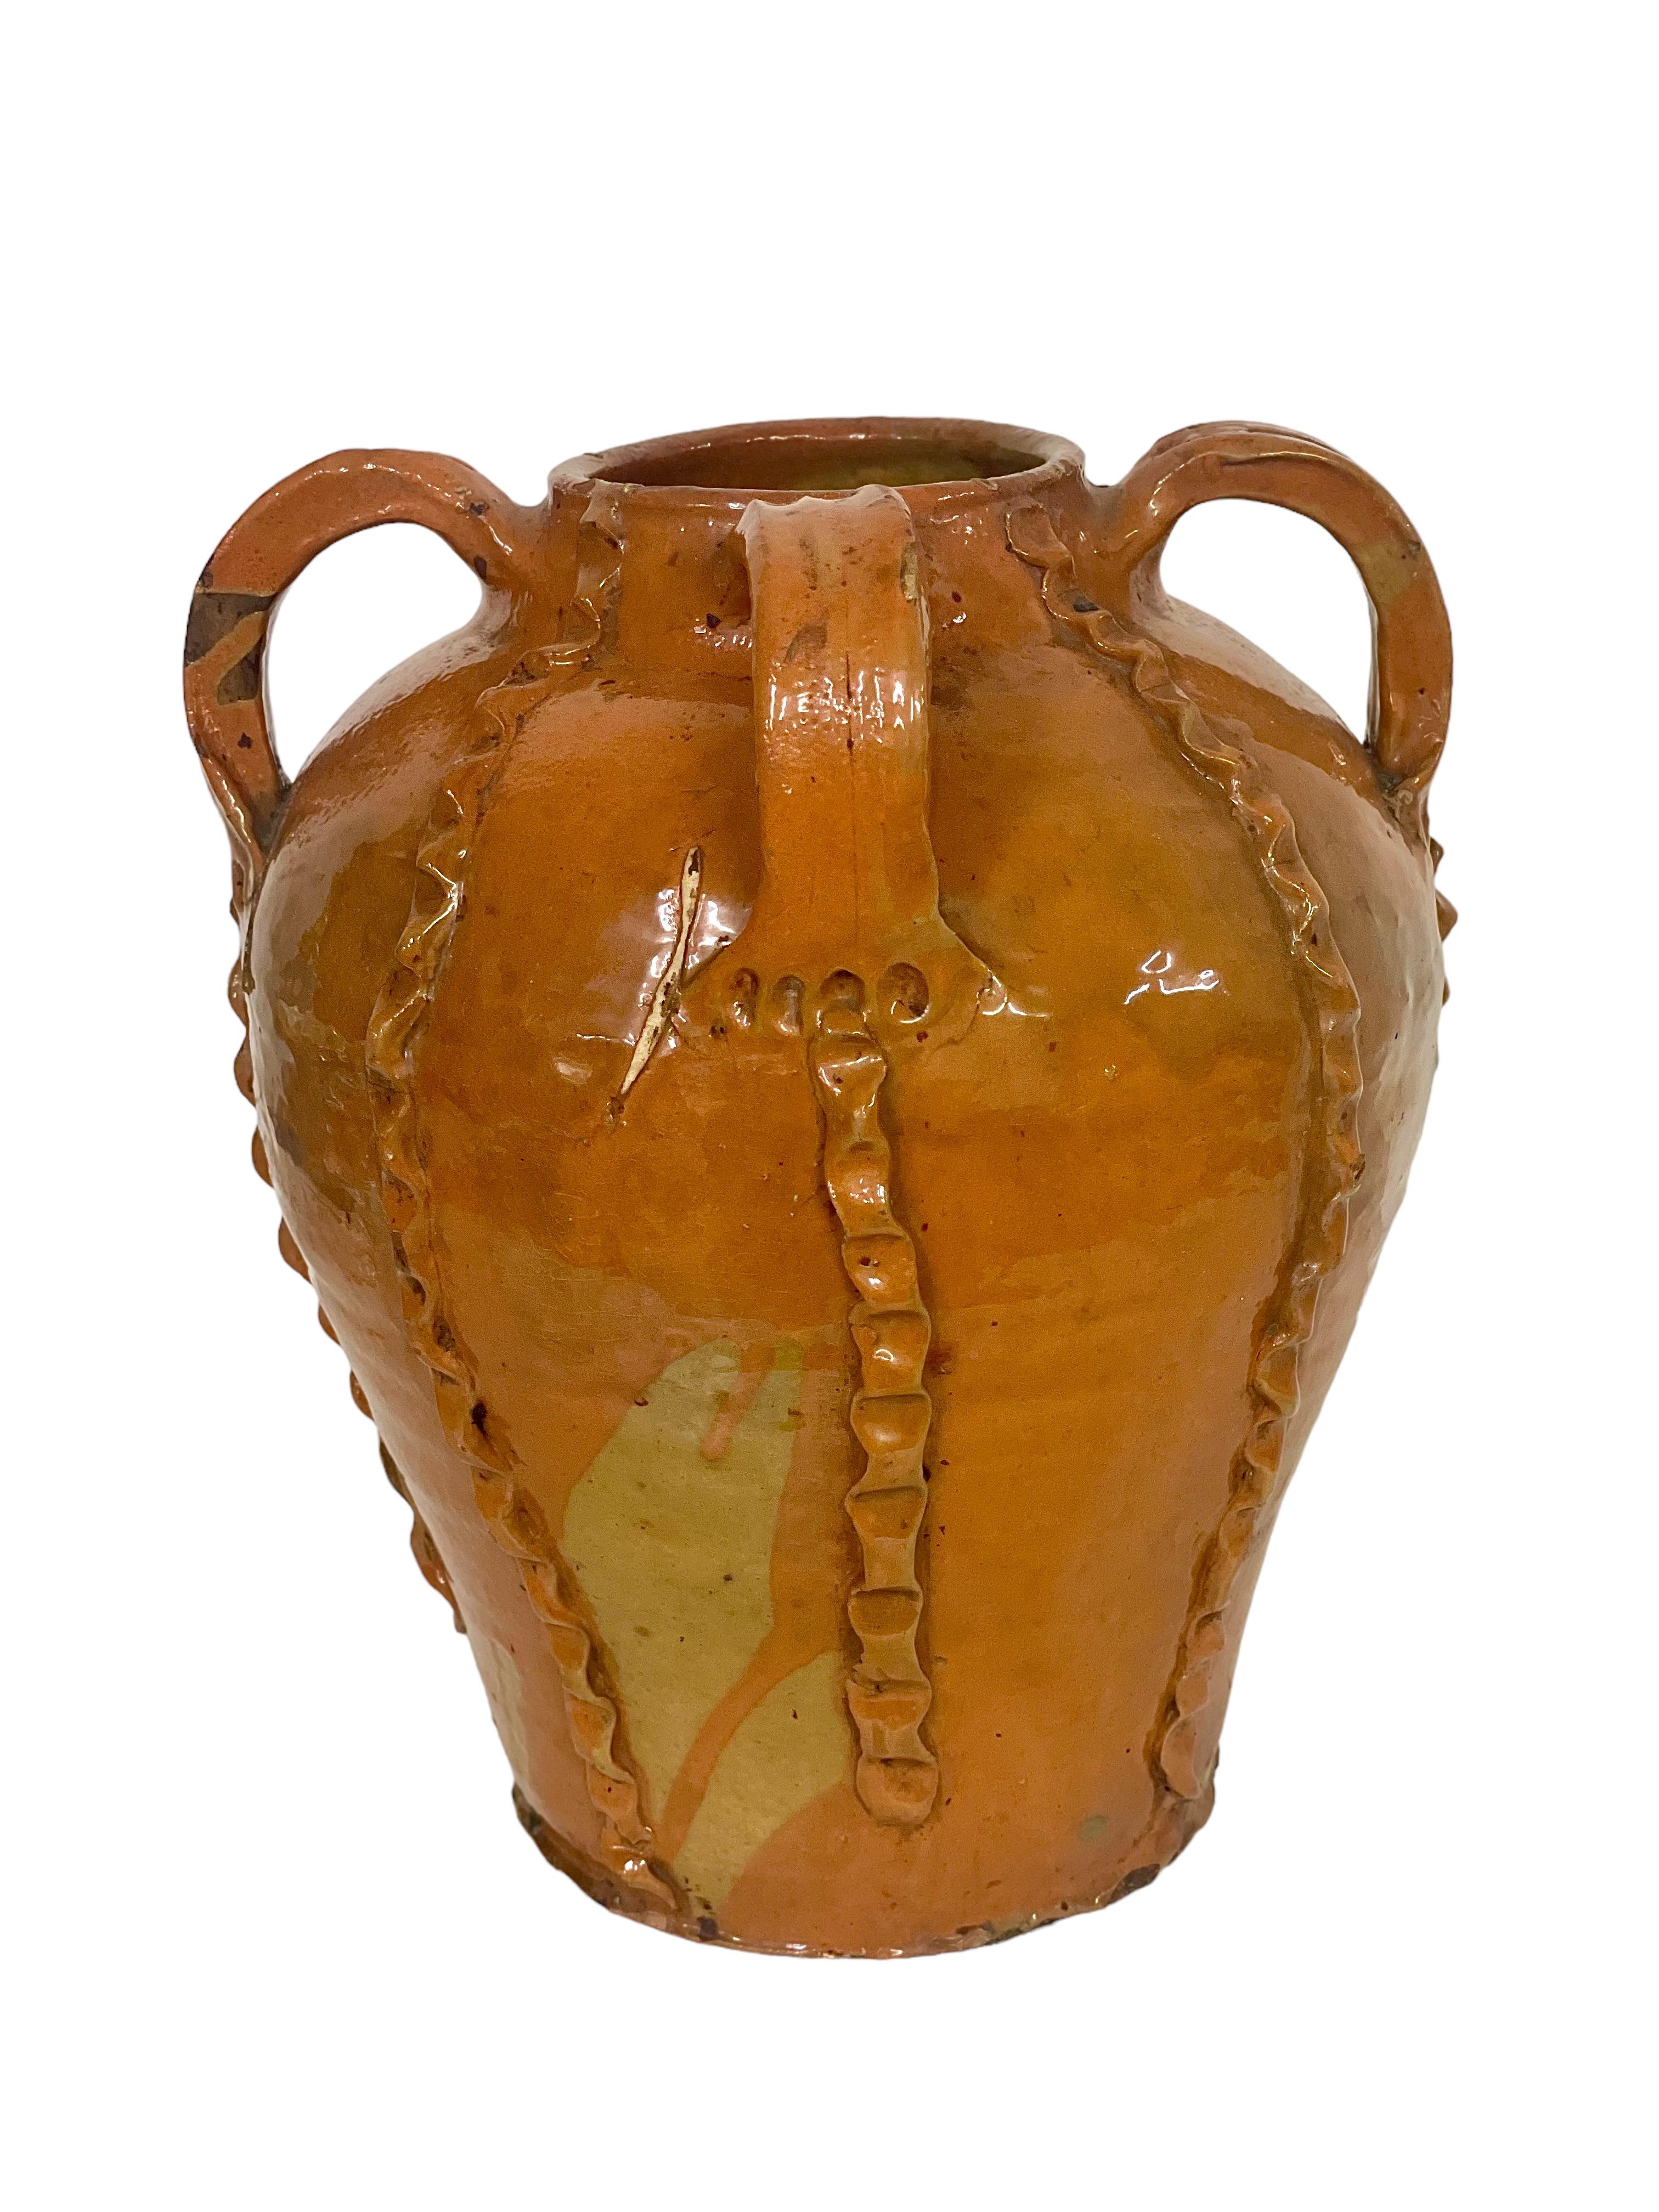 French 18th C. Glazed Nut Oil Jar with Three Handles from Dordogne Region For Sale